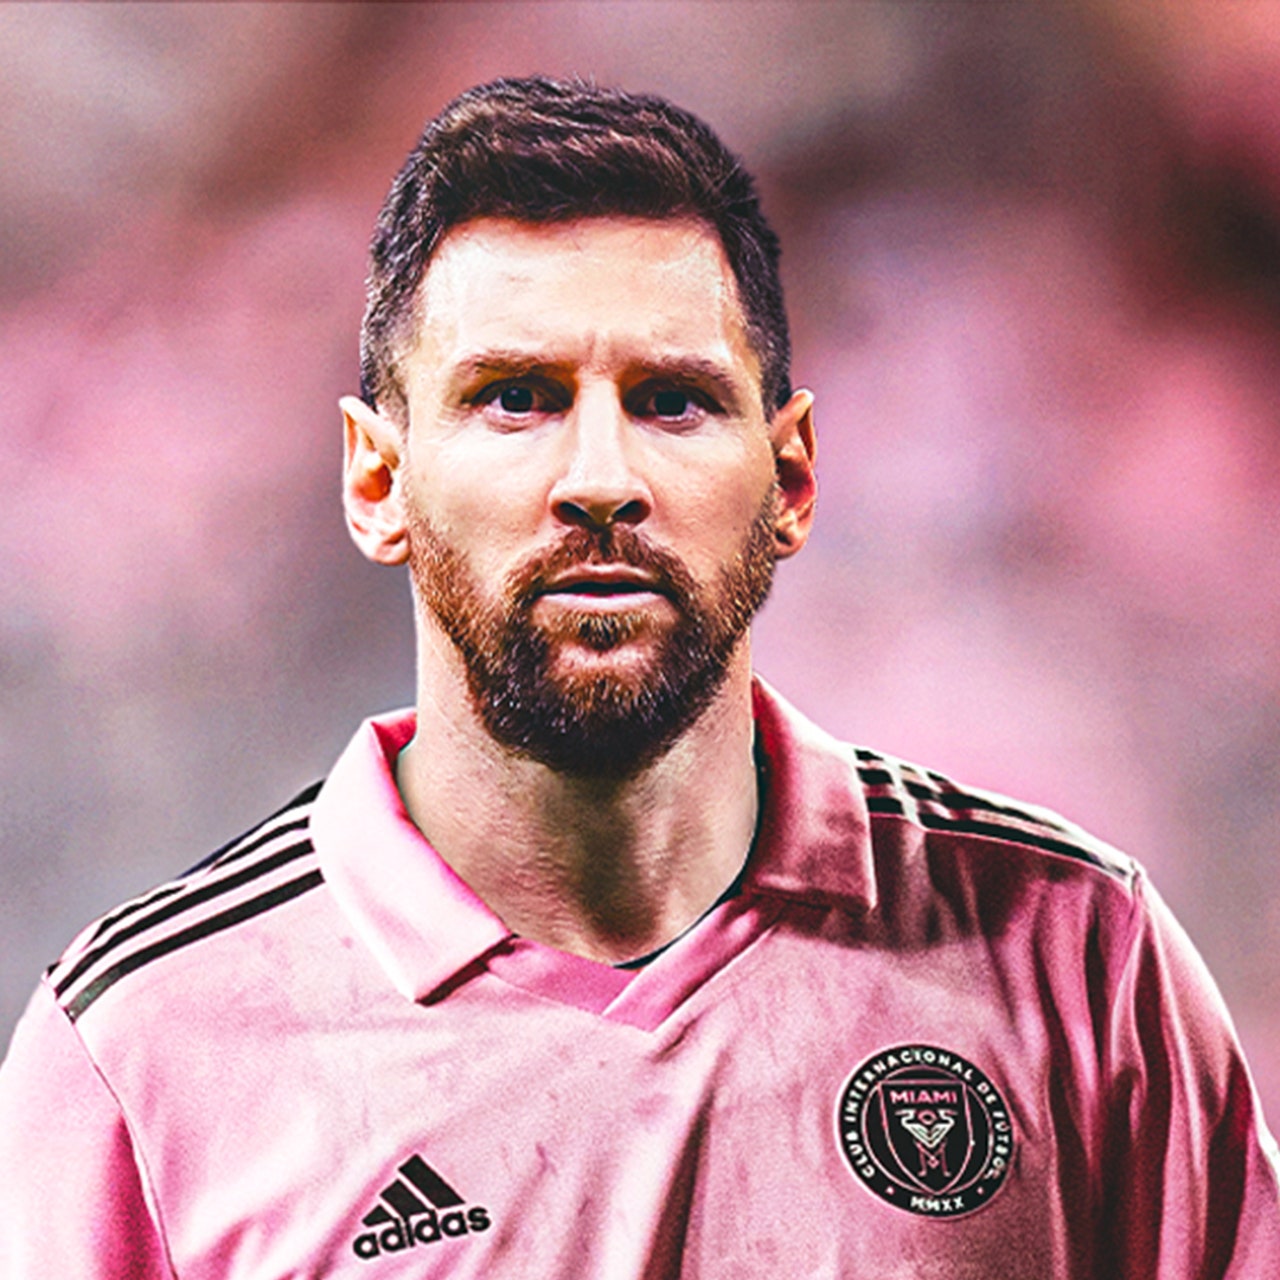 Lionel Messi in MLS is a dream come true for American sports - ESPN